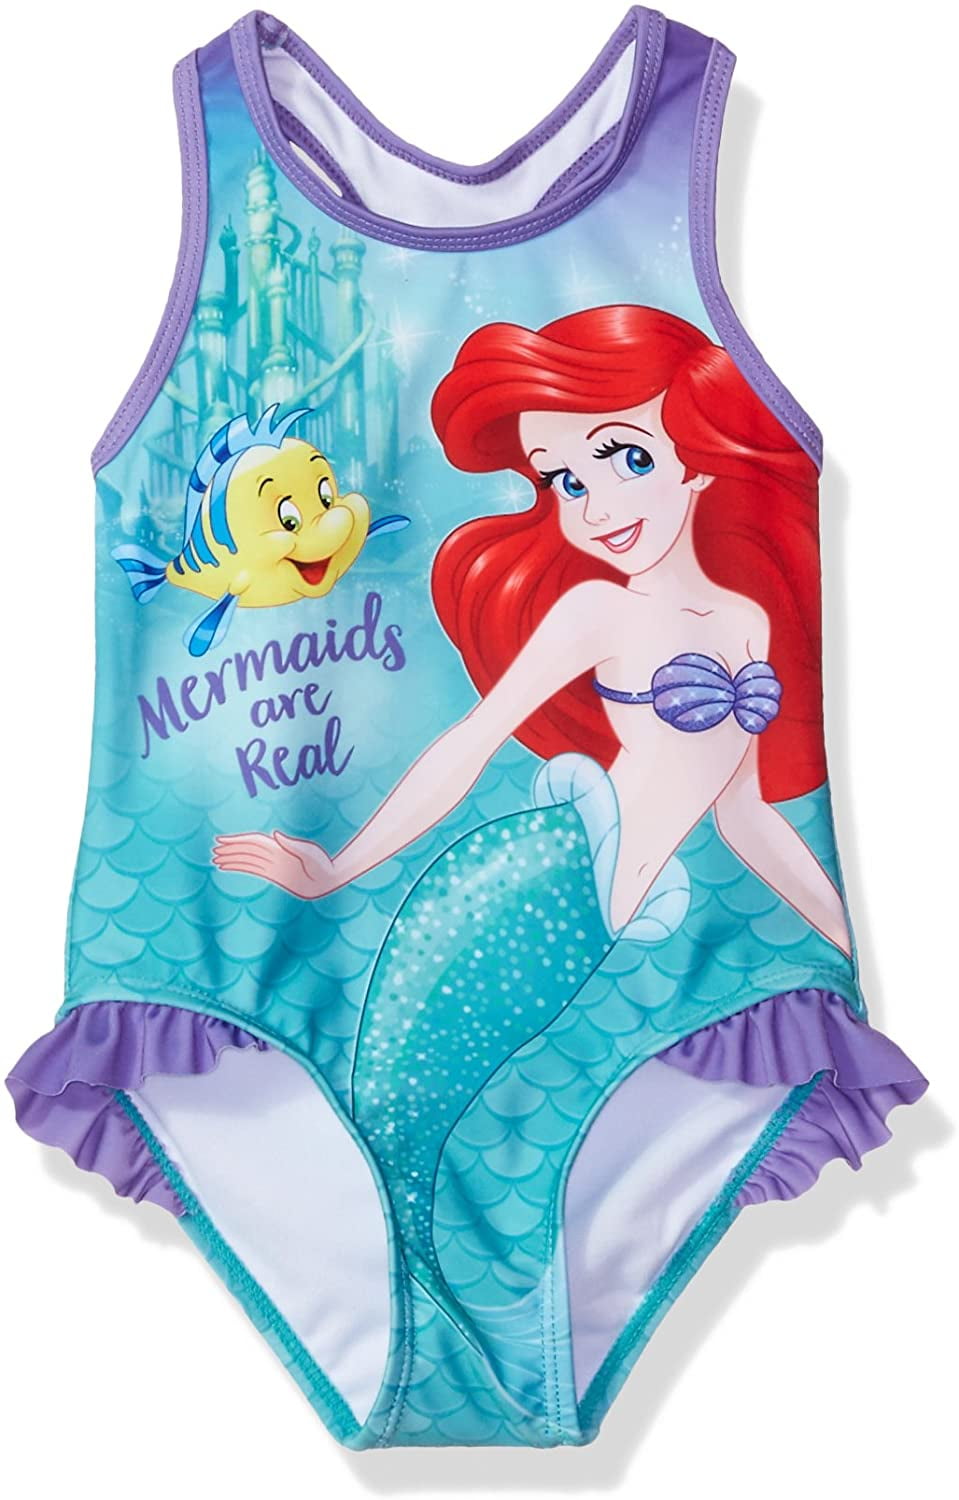 Swim Bathing Suit Toddler's Size 2T or 5T $30 LITTLE MERMAID ARIEL DISNEY UPF50 